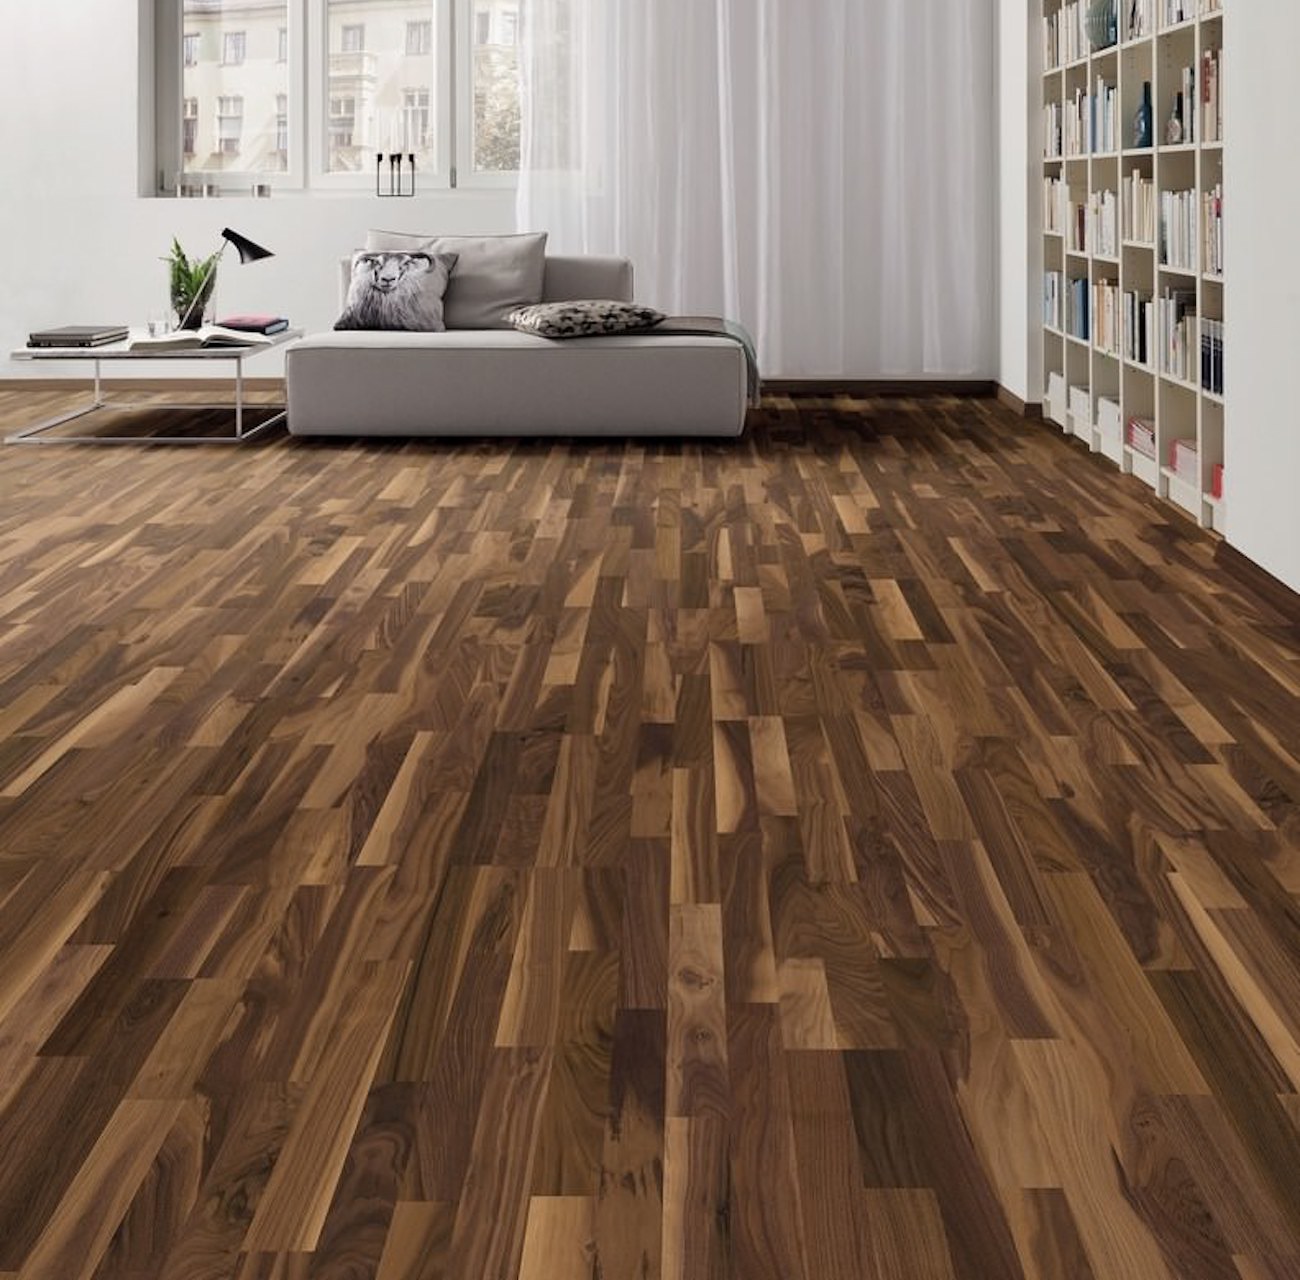 Engireered wood flooring, wide plank flooring